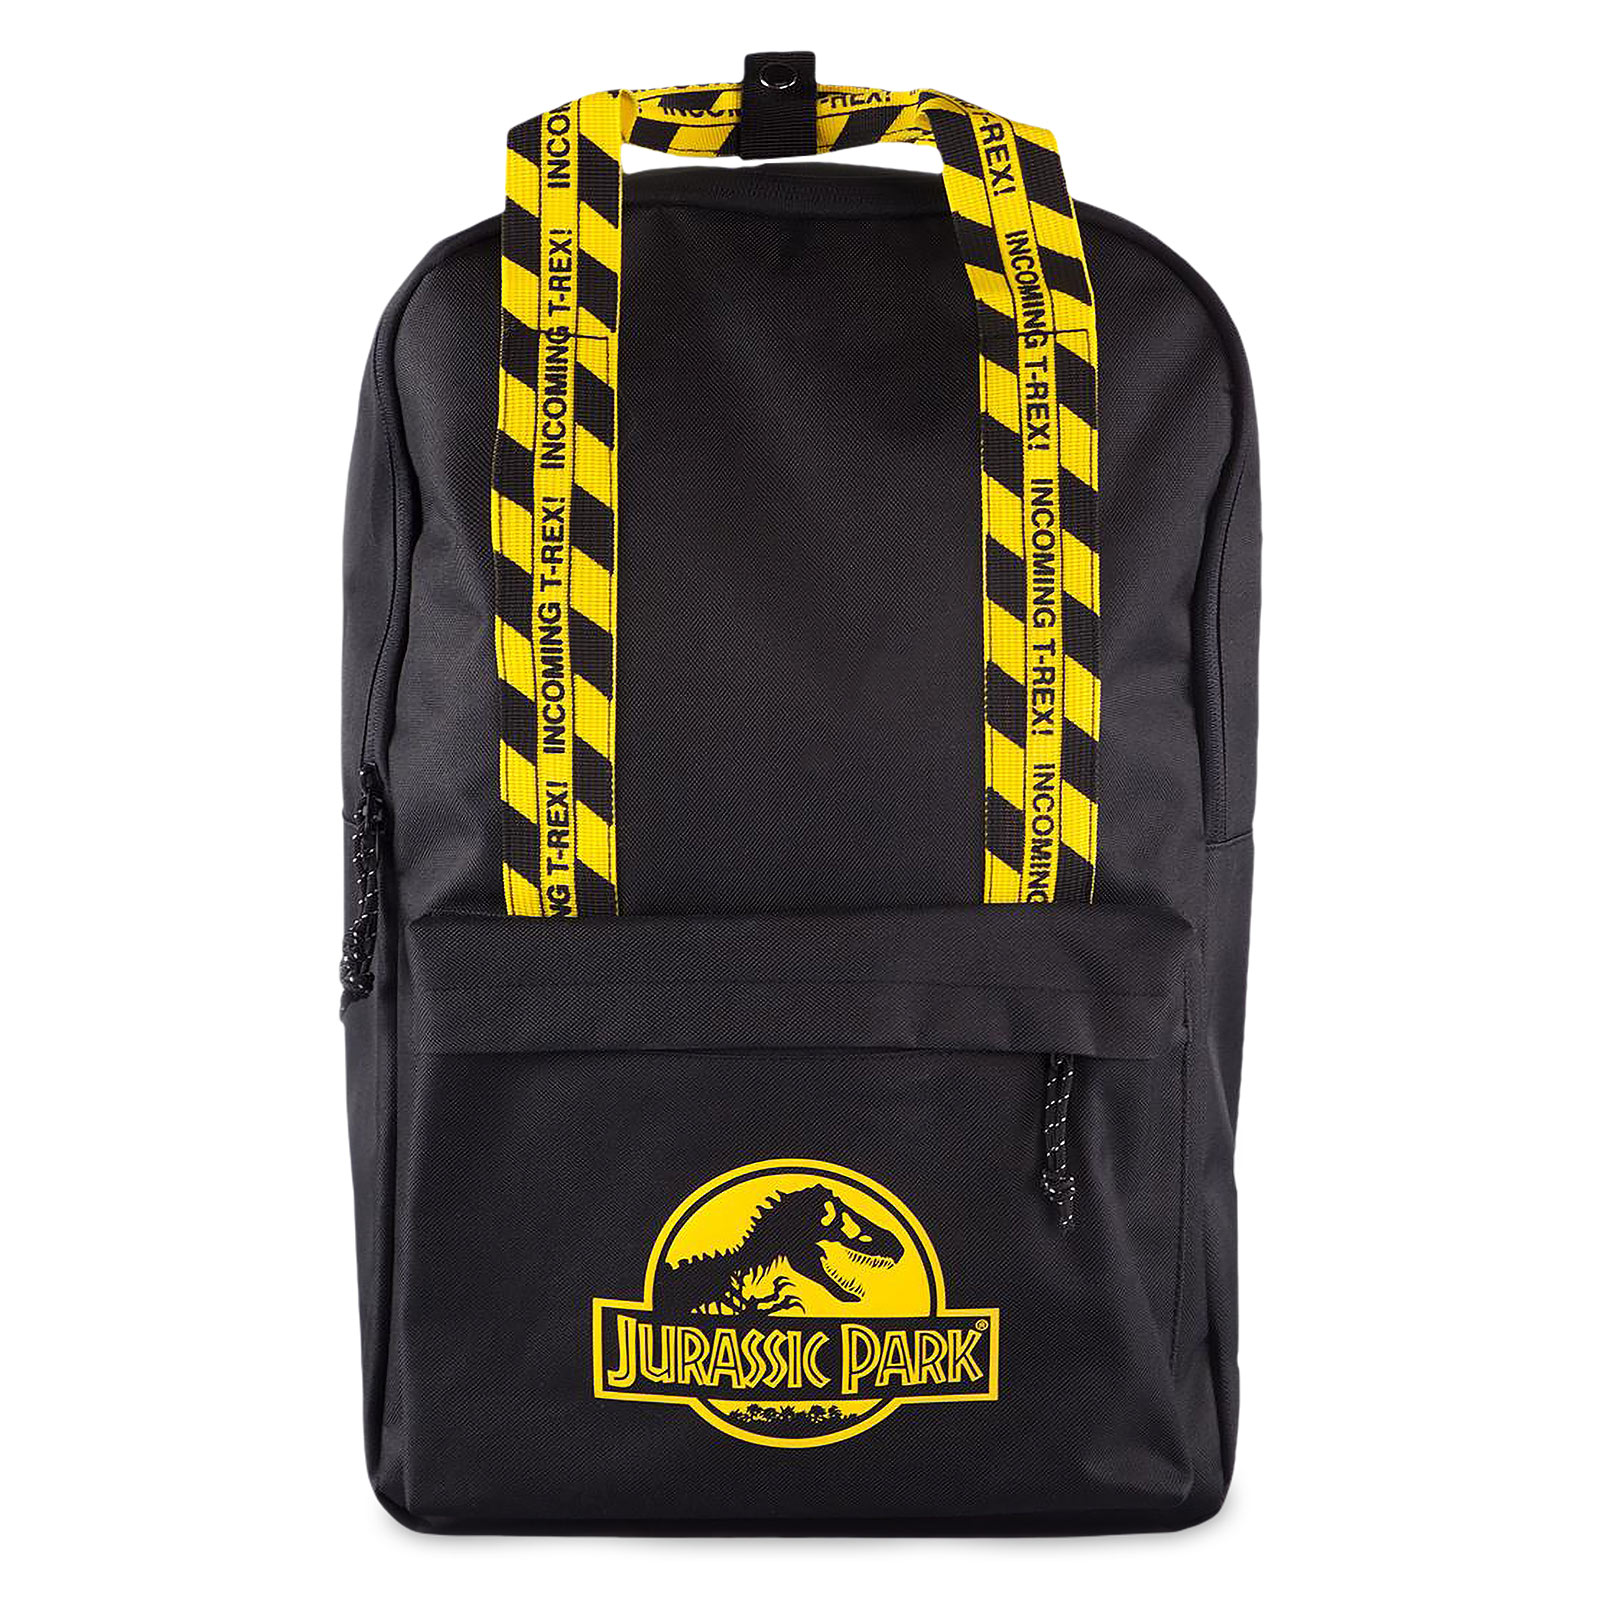 Jurassic Park - Caution Tape Backpack